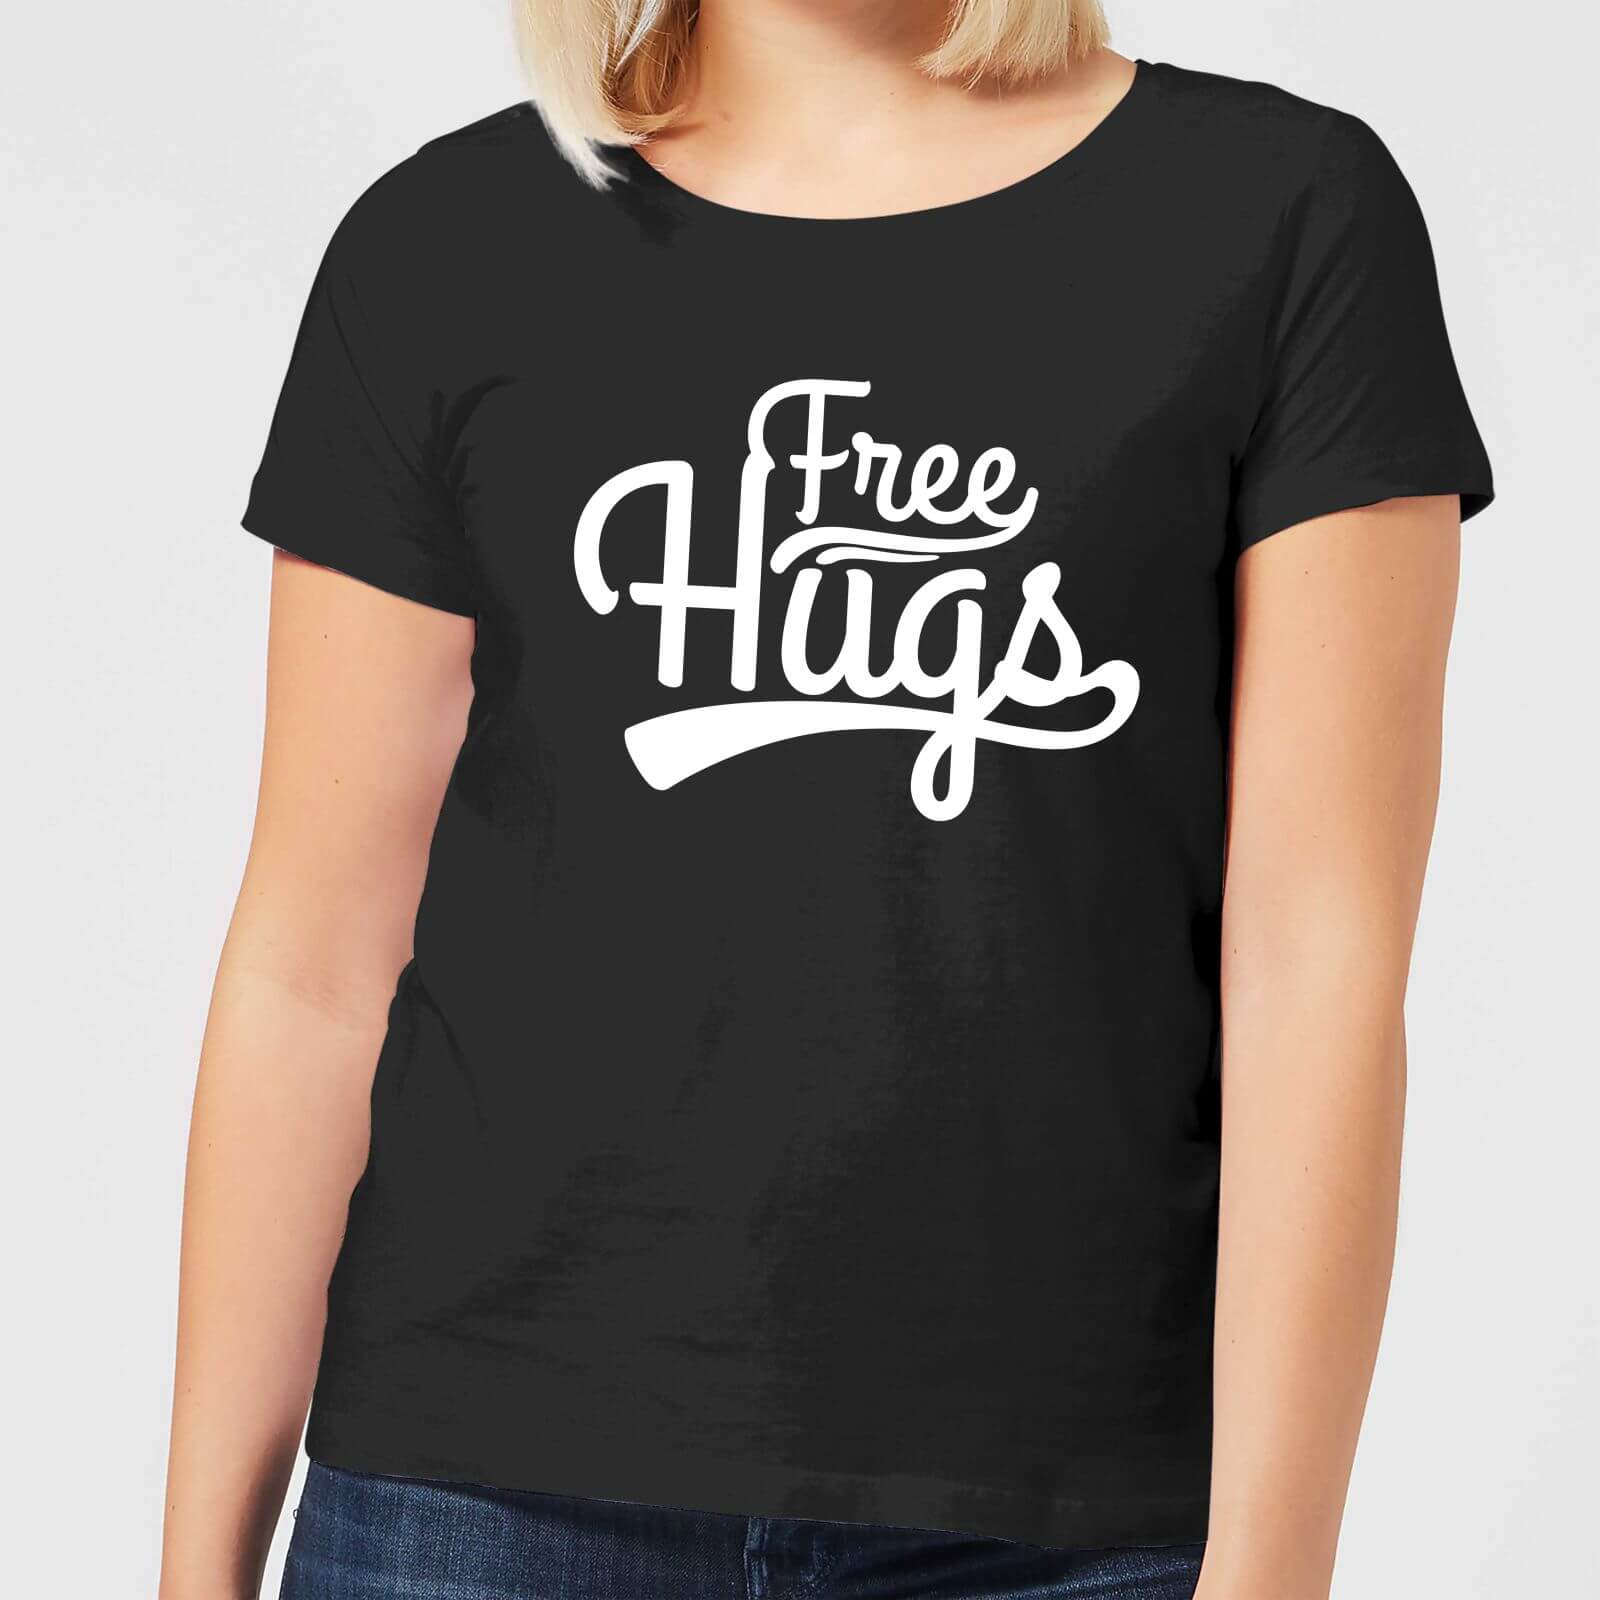 Free Hugs Women's T-Shirt - Black - 3XL - Black